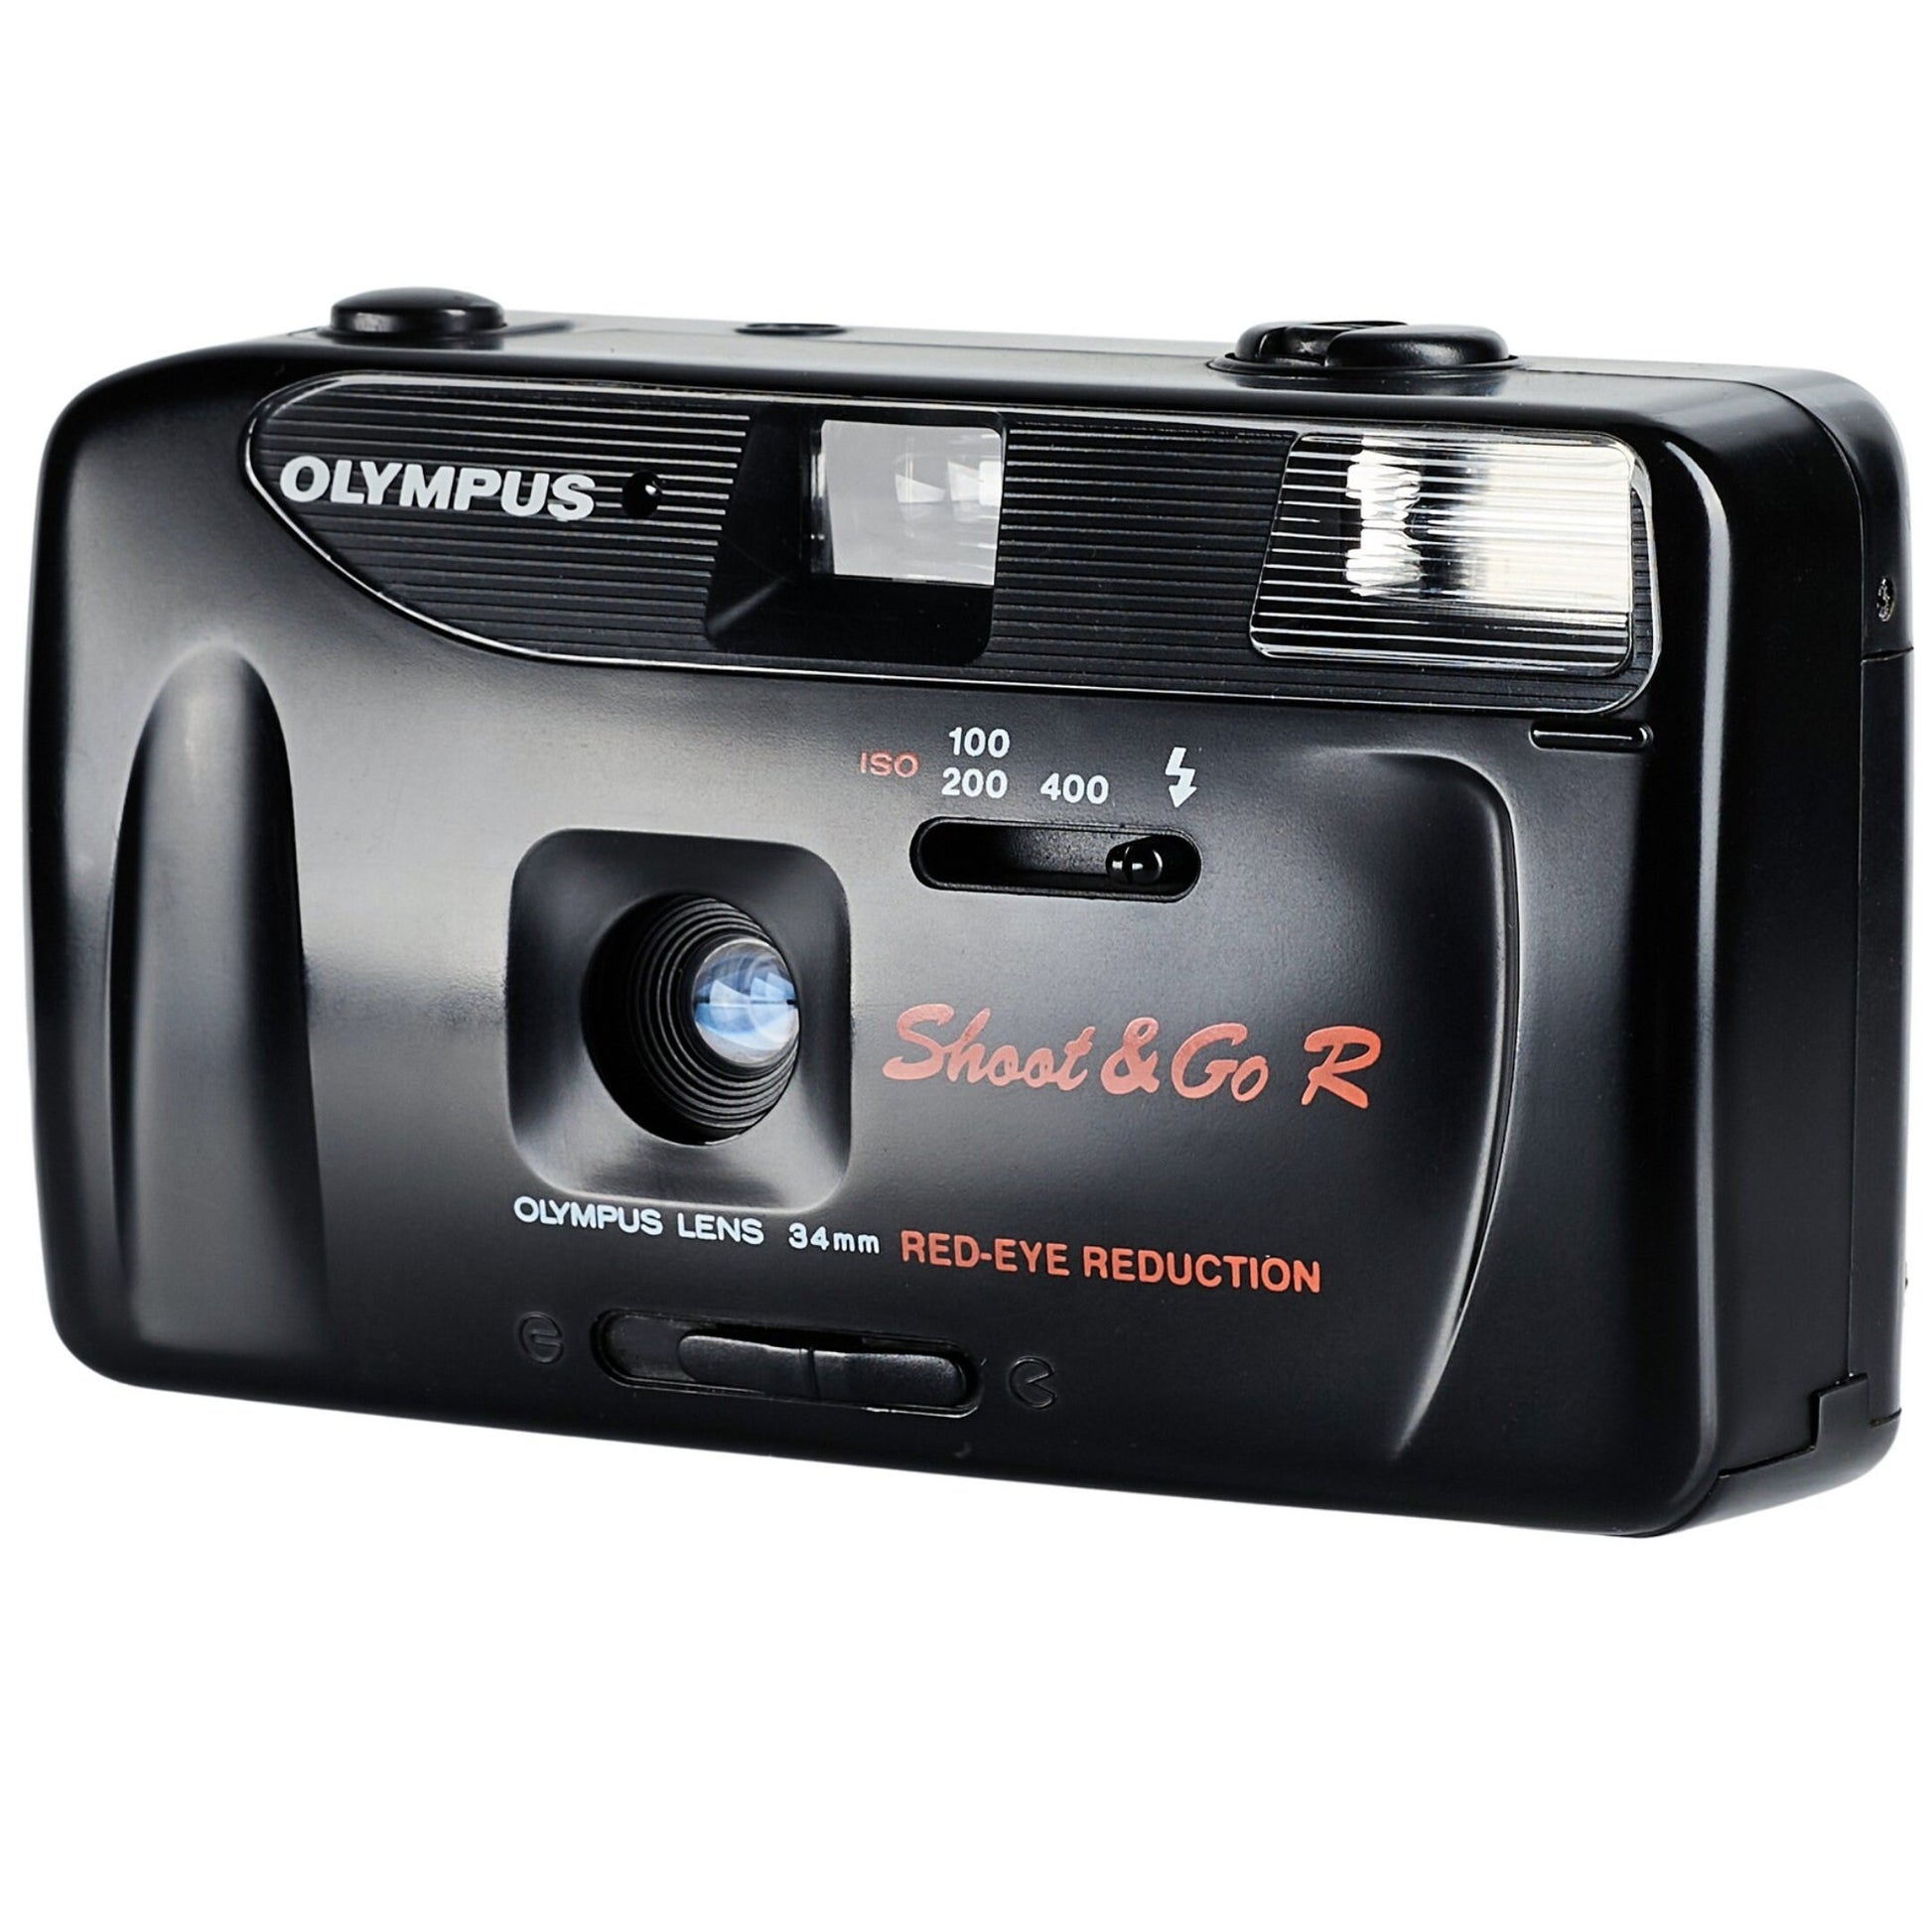 Olympus Shoot and Go, Working Film Camera, Vintage Camera - Vintage Polaroid Instant Cameras